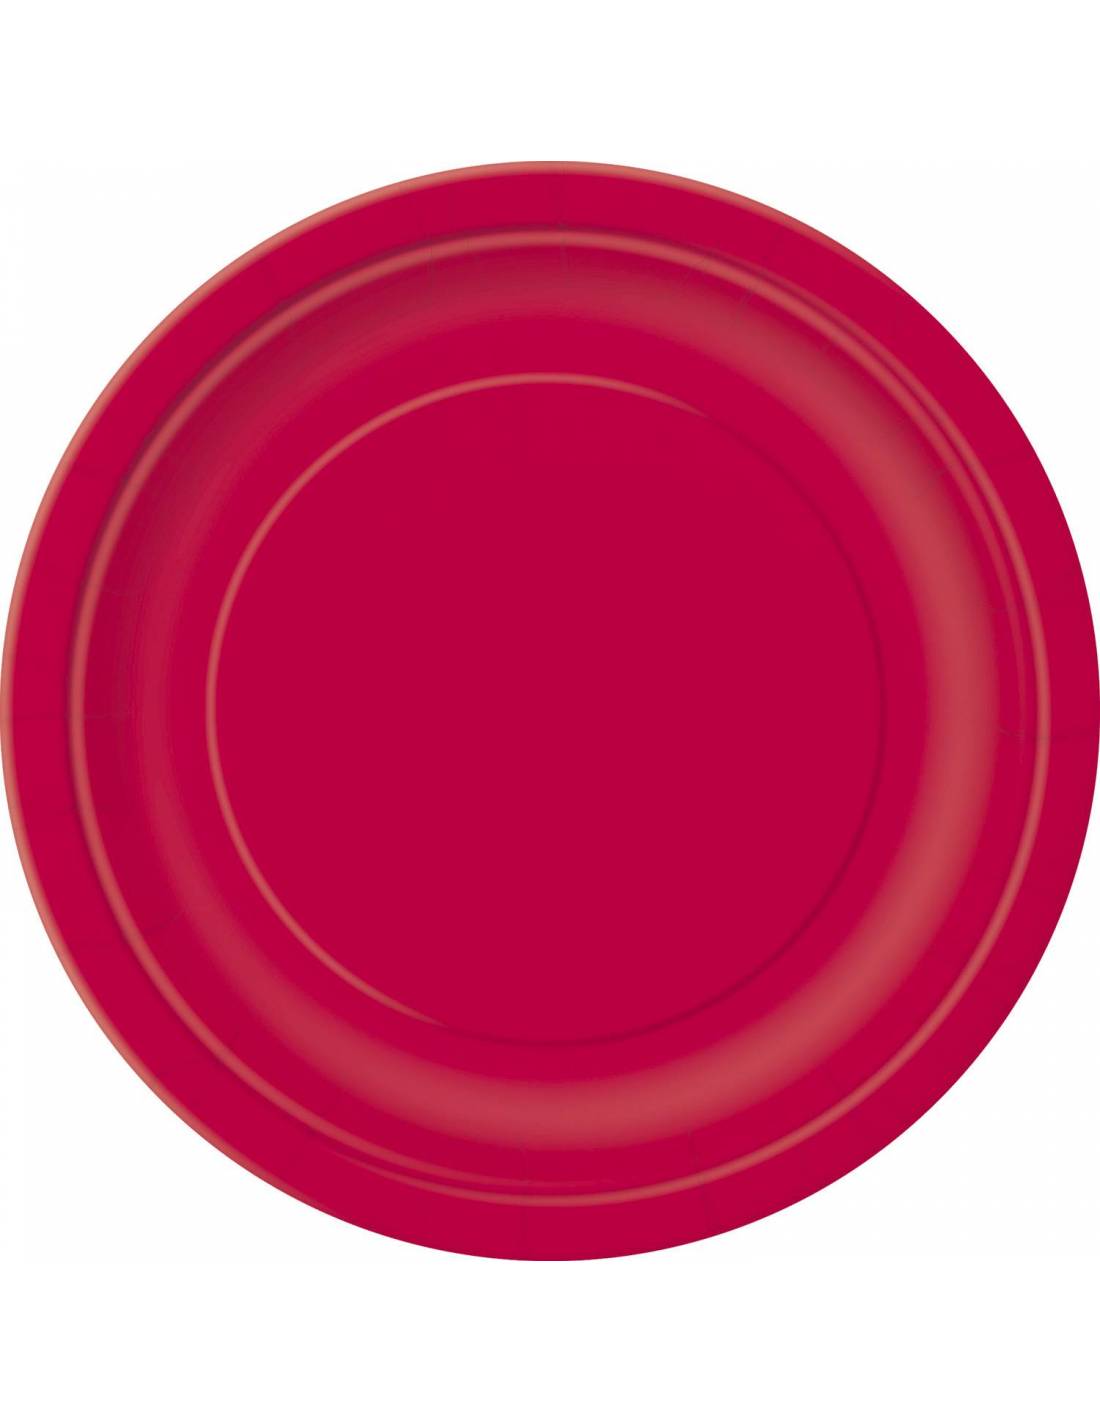 Basic red Eco plate / 8 u.